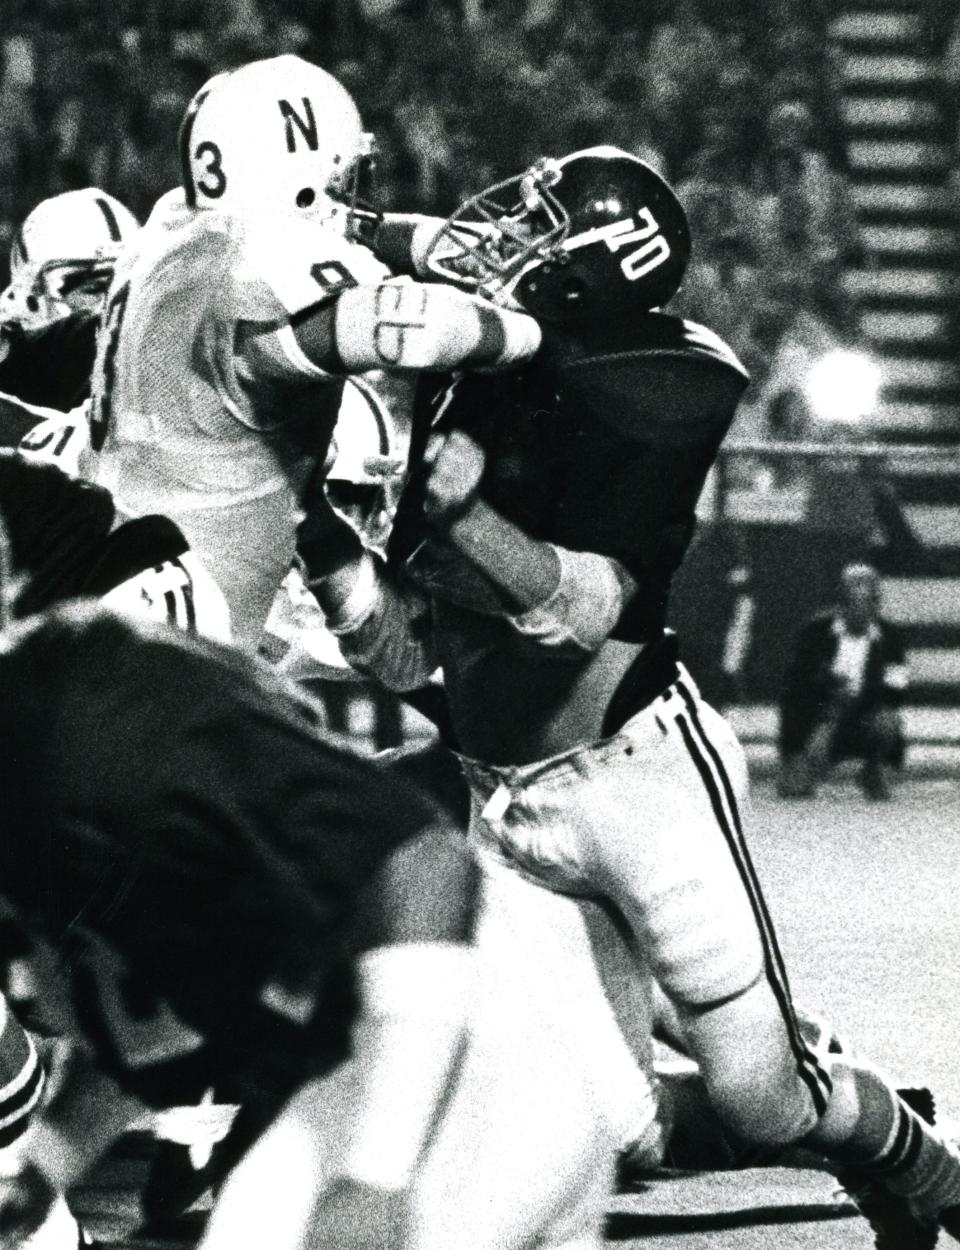 Mike Brock (70) blocks during an Alabama football game.